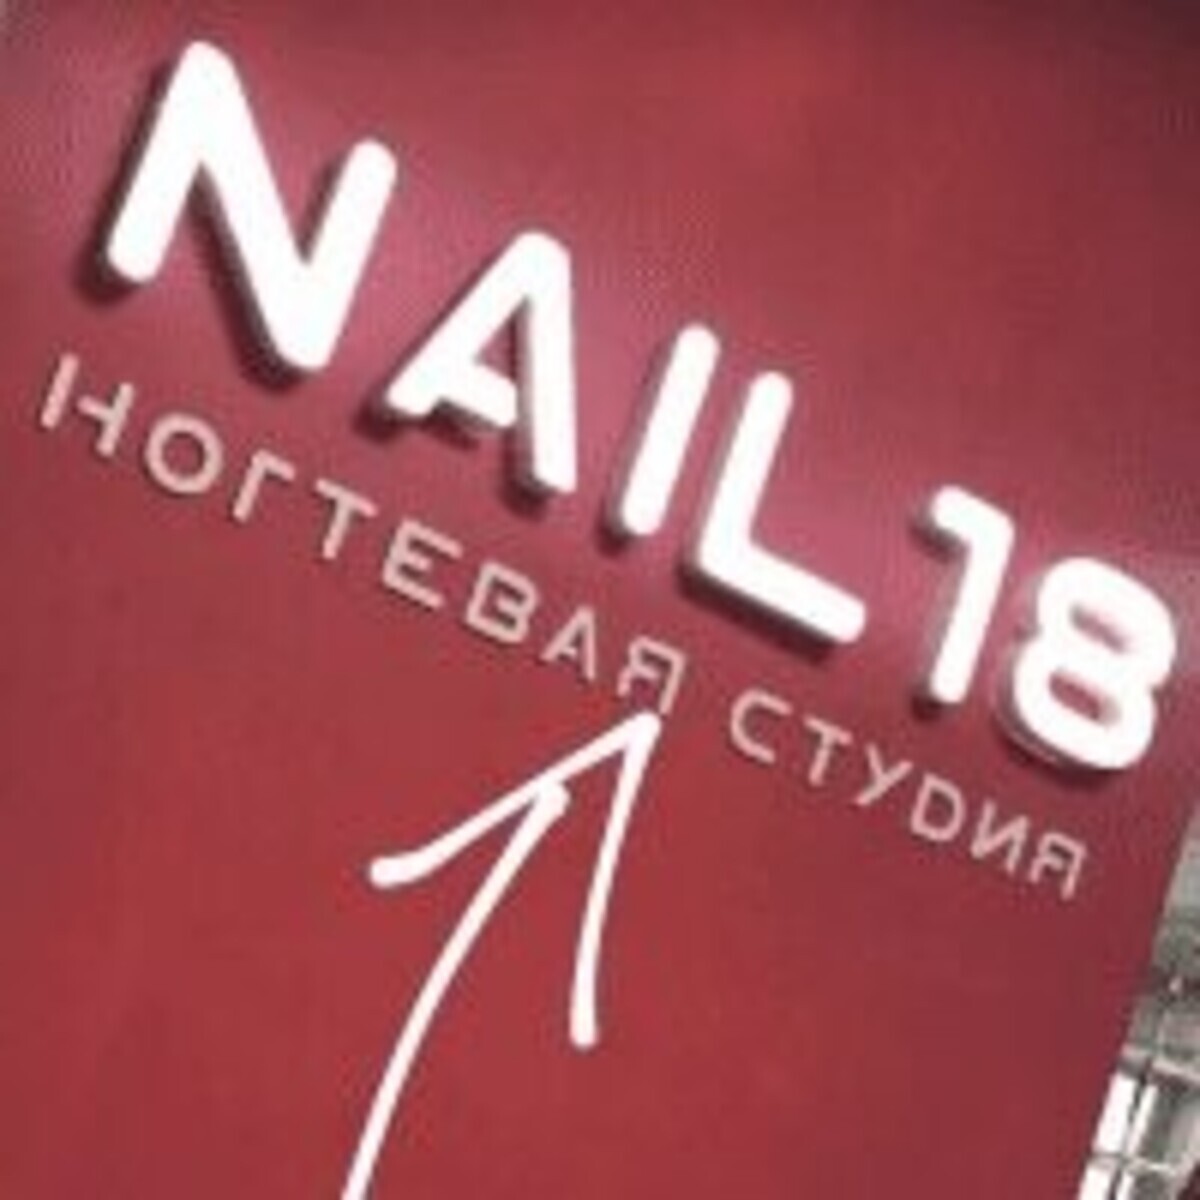 Nail18 - Ижевск - Витрина с улицы